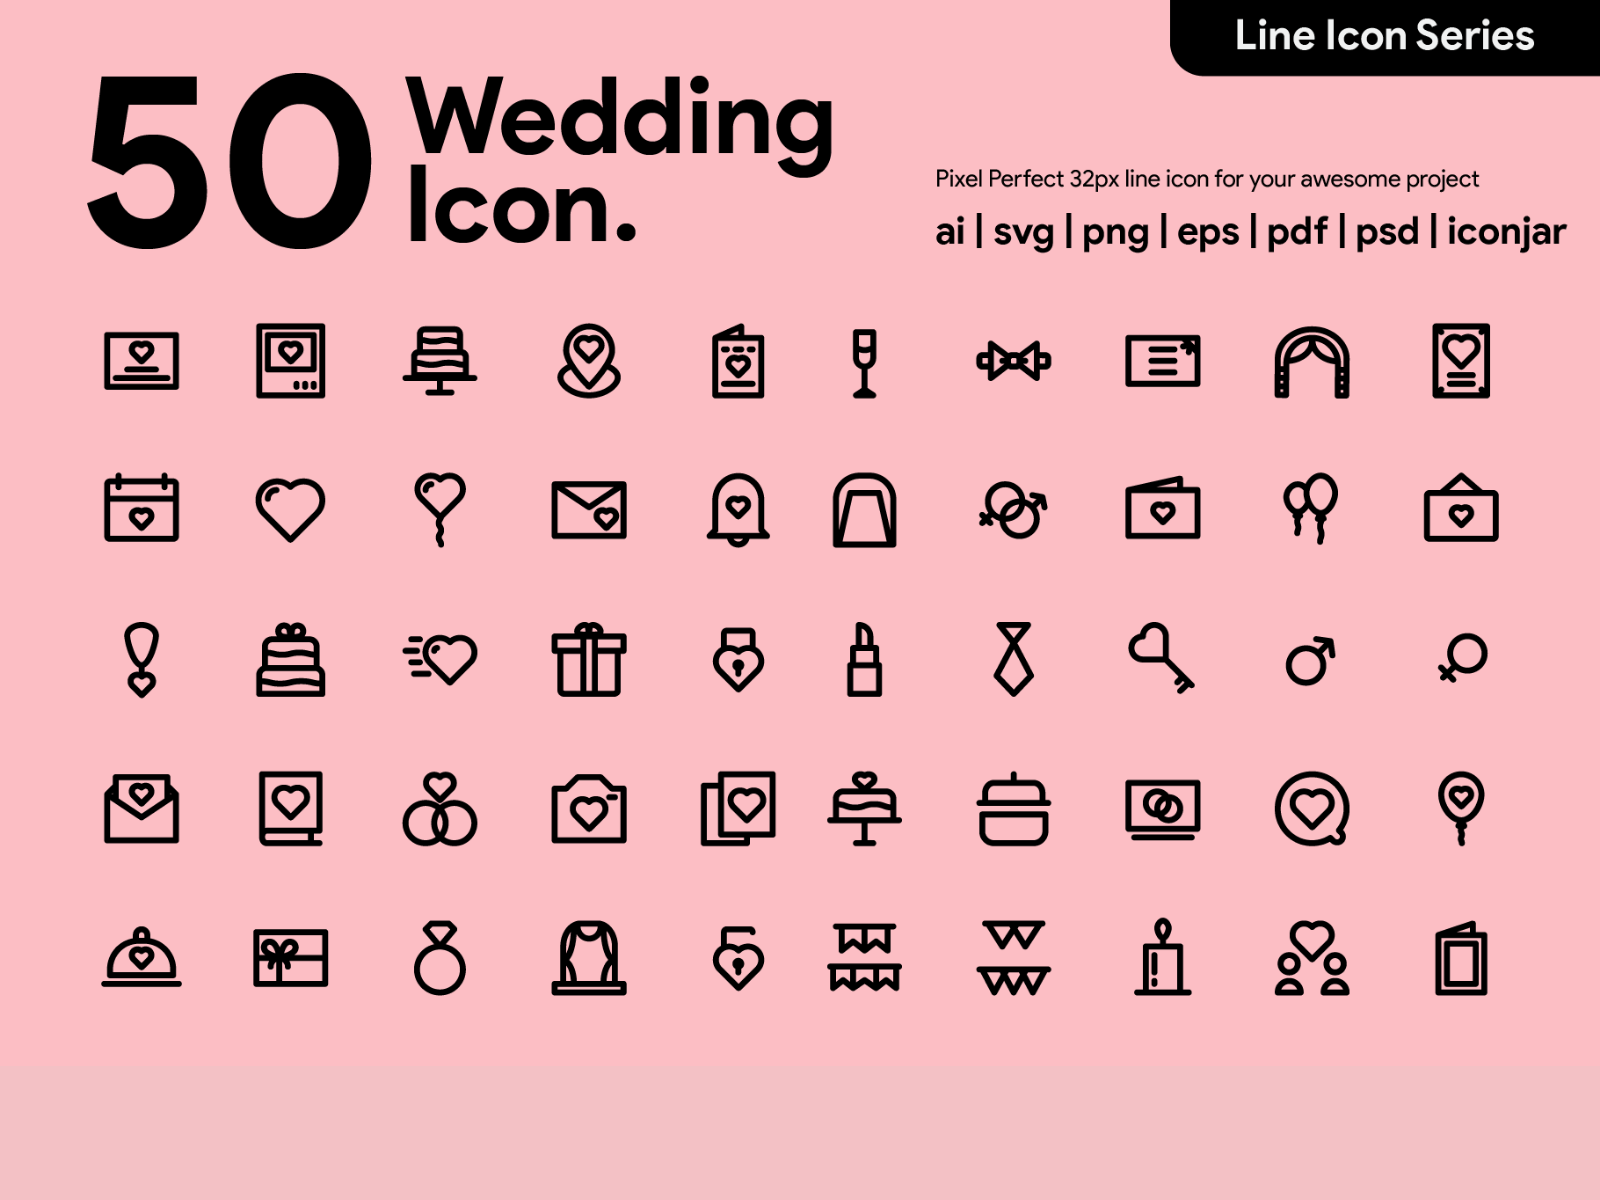 App icons design idea #308: Kawaicon - 50 Wedding Line Icons